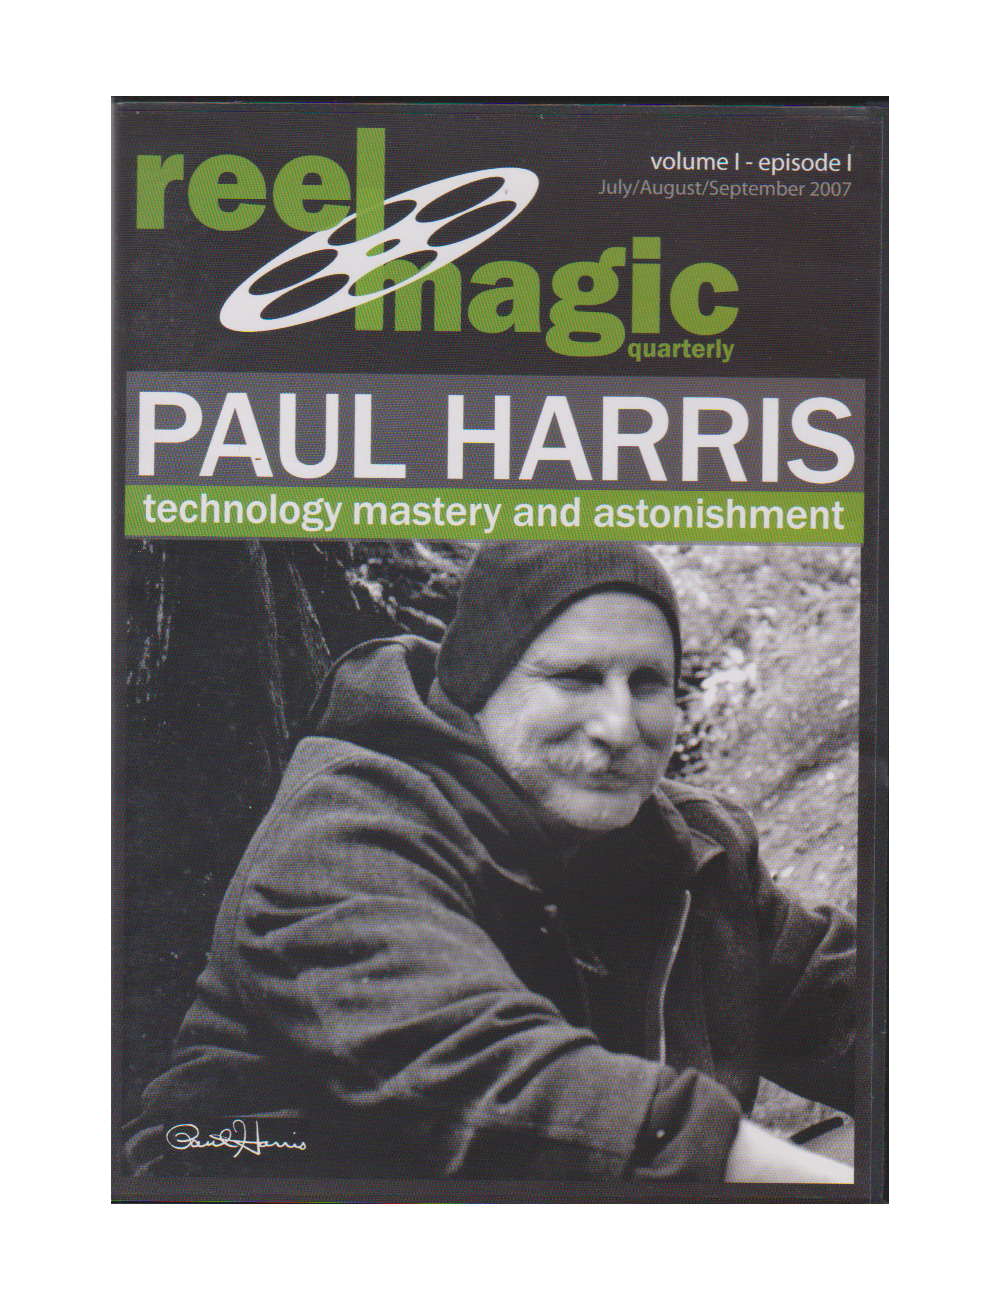 DVD REEL MAGIC QUARTERLY Volume 1 - Episode 1 PAUL HARRIS